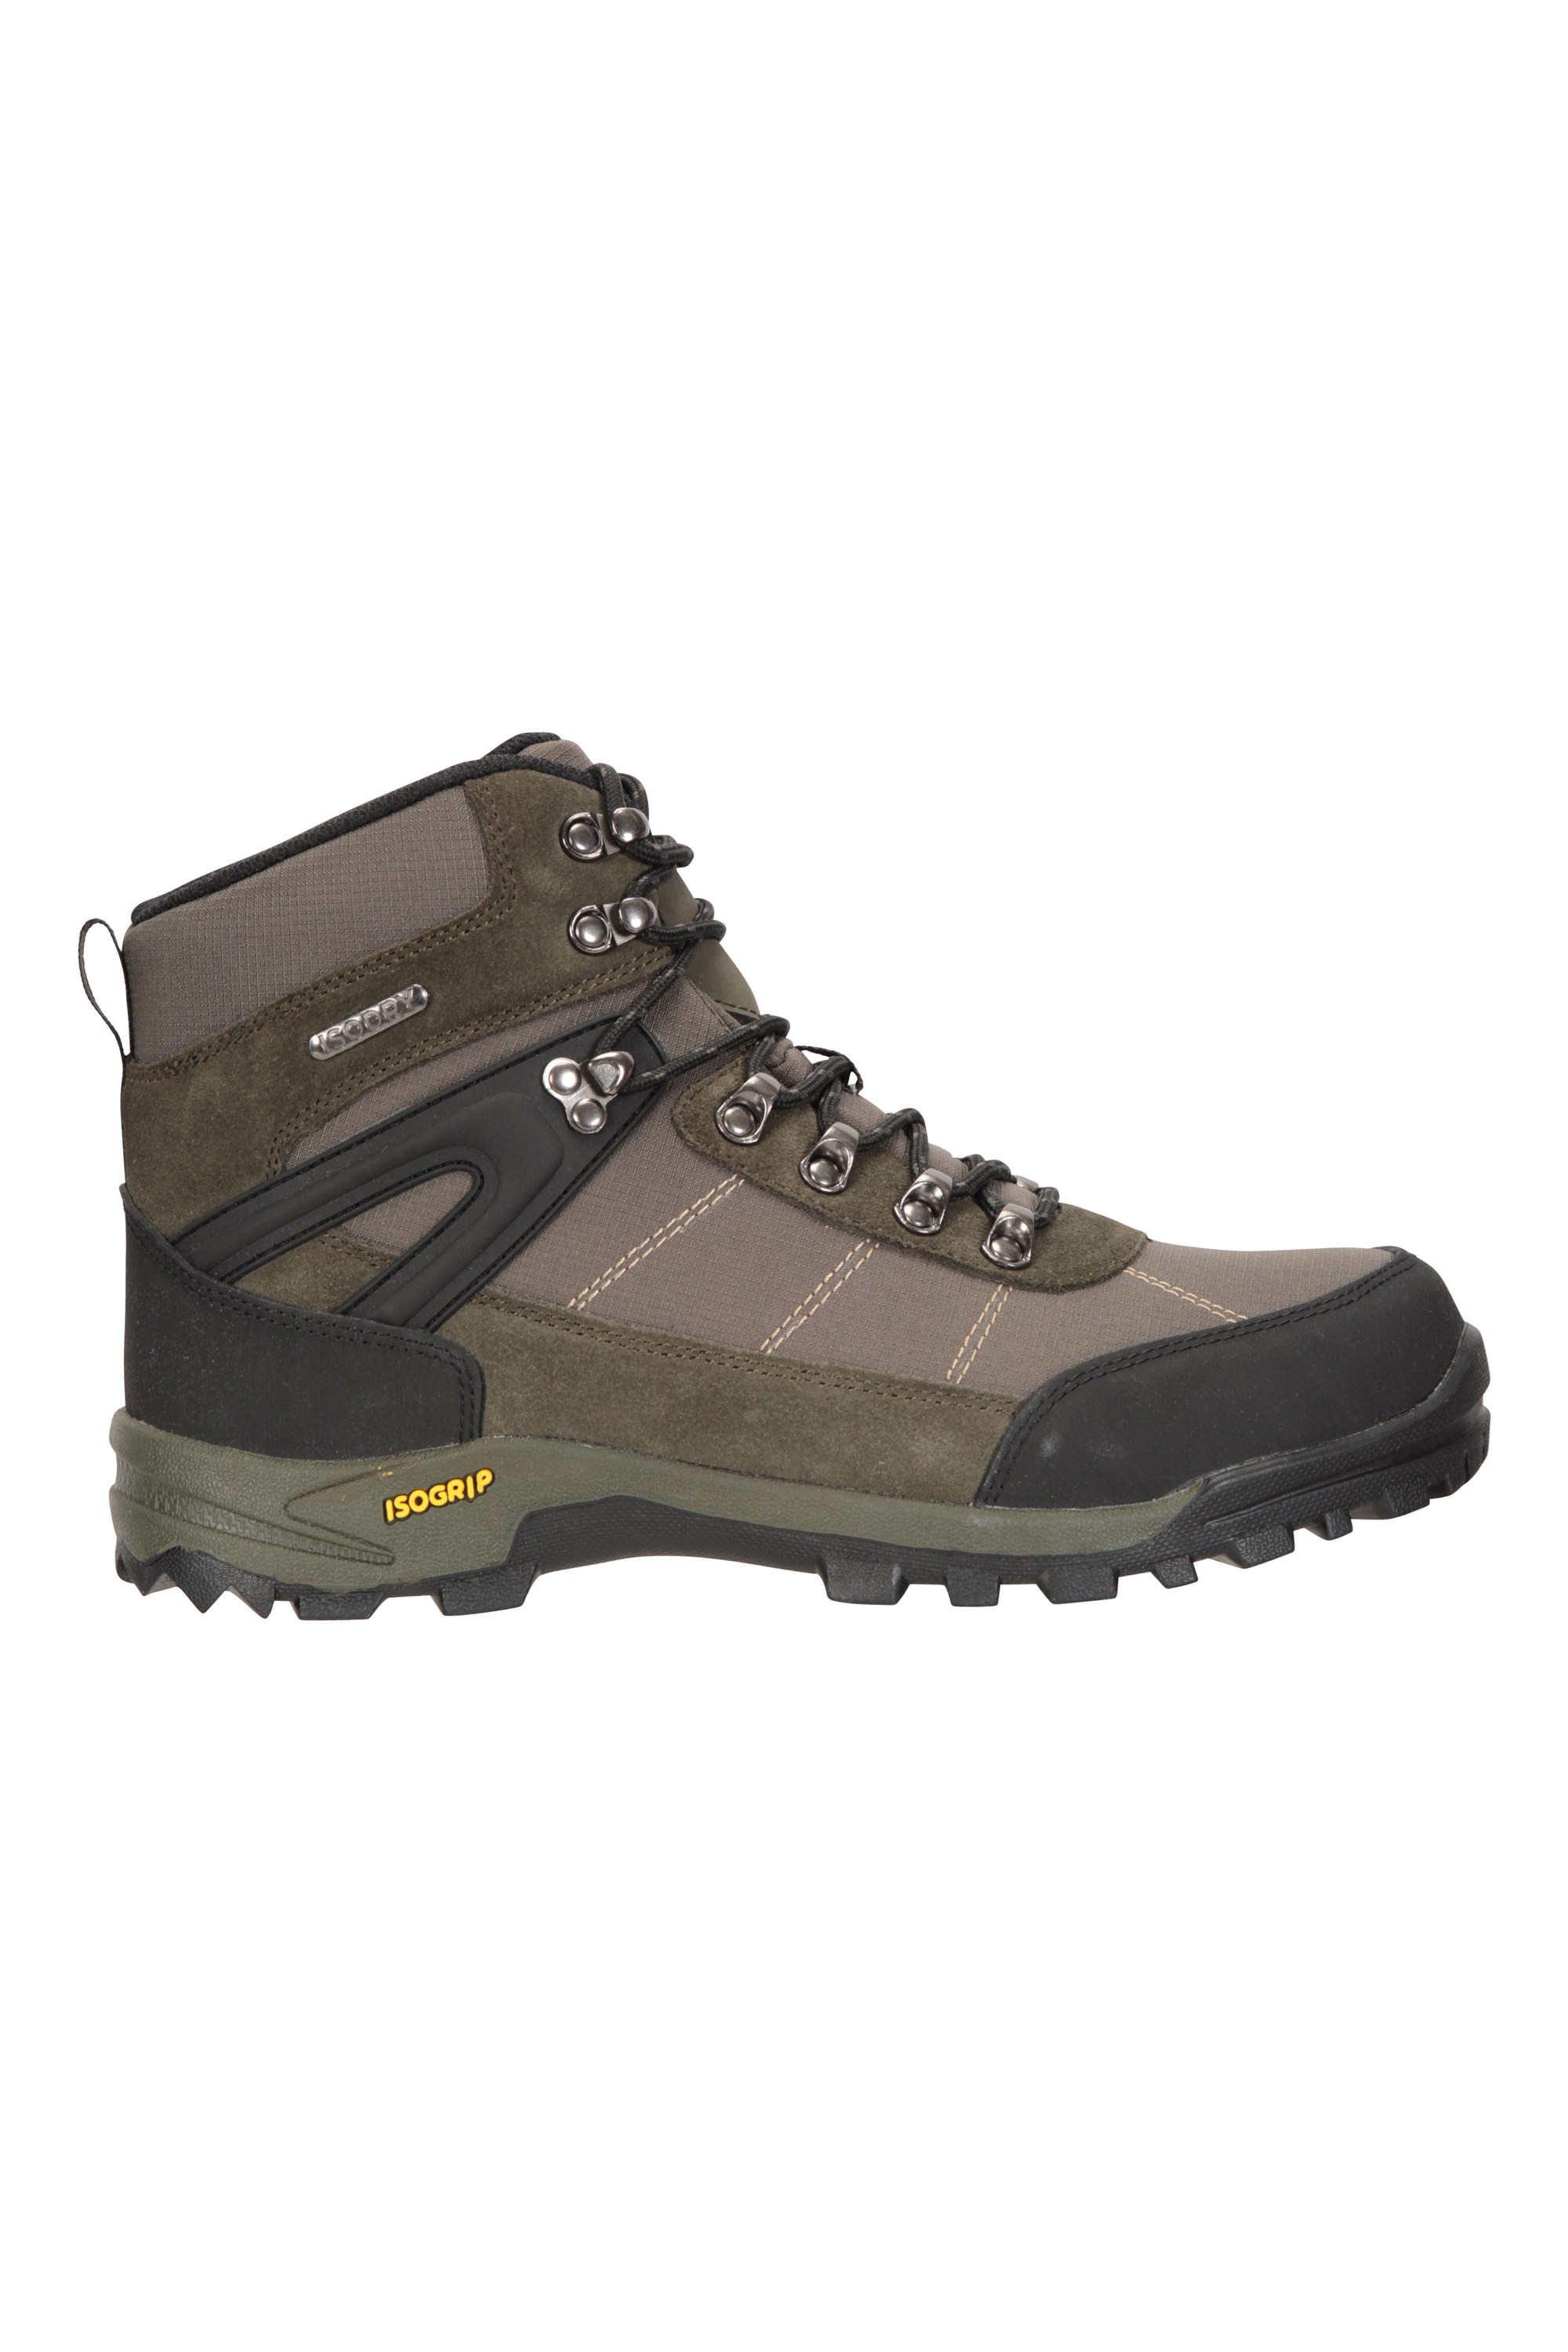 waterproof hiking boots uk